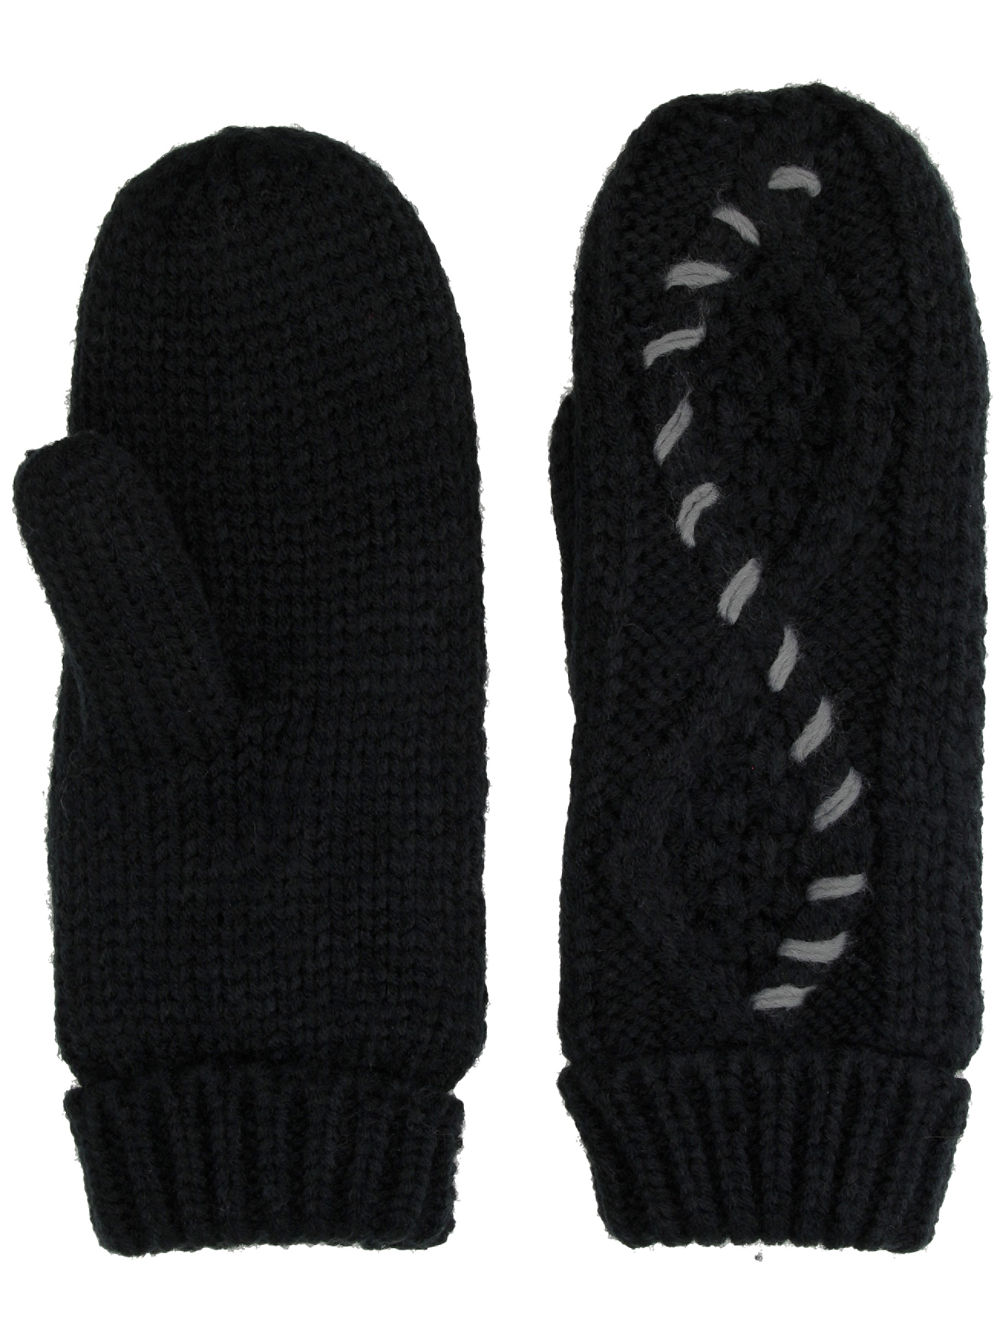 Cable Knit Handschoenen